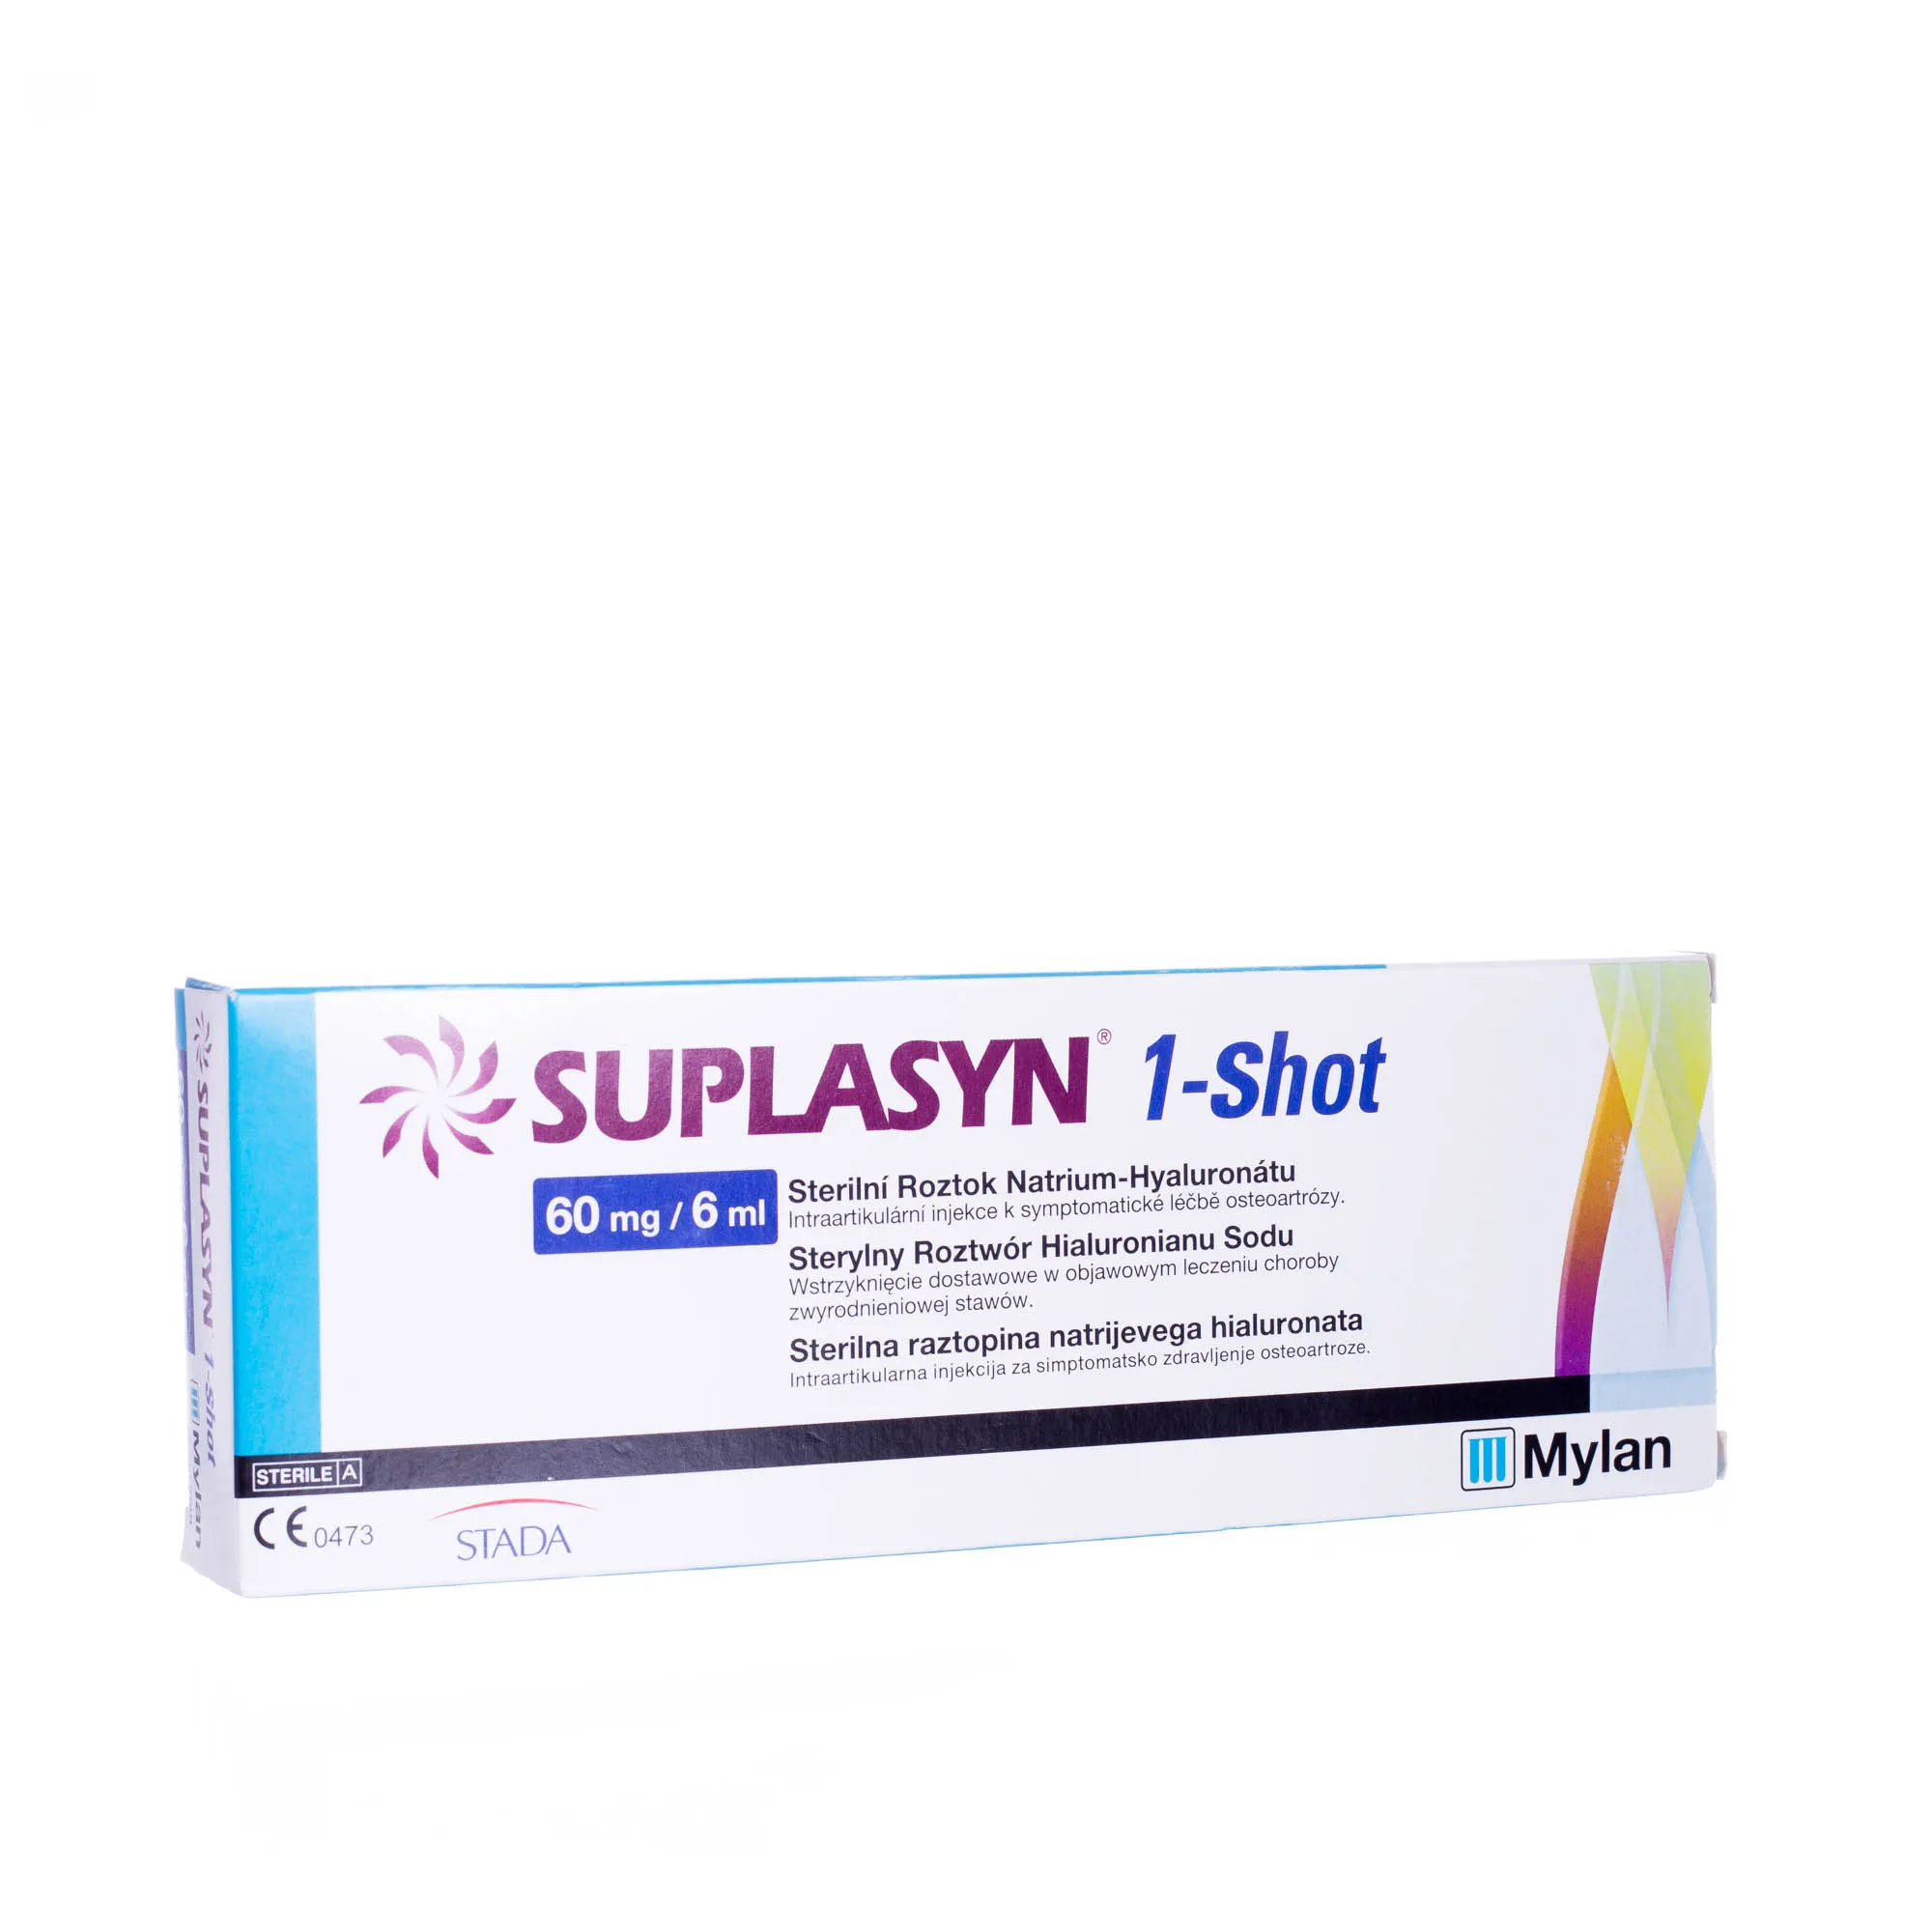 Suplasyn 1-shot 60 mg/ 6 ml, sterylny roztwór hialuronianu sodu, 1 ampułkostrzykawka